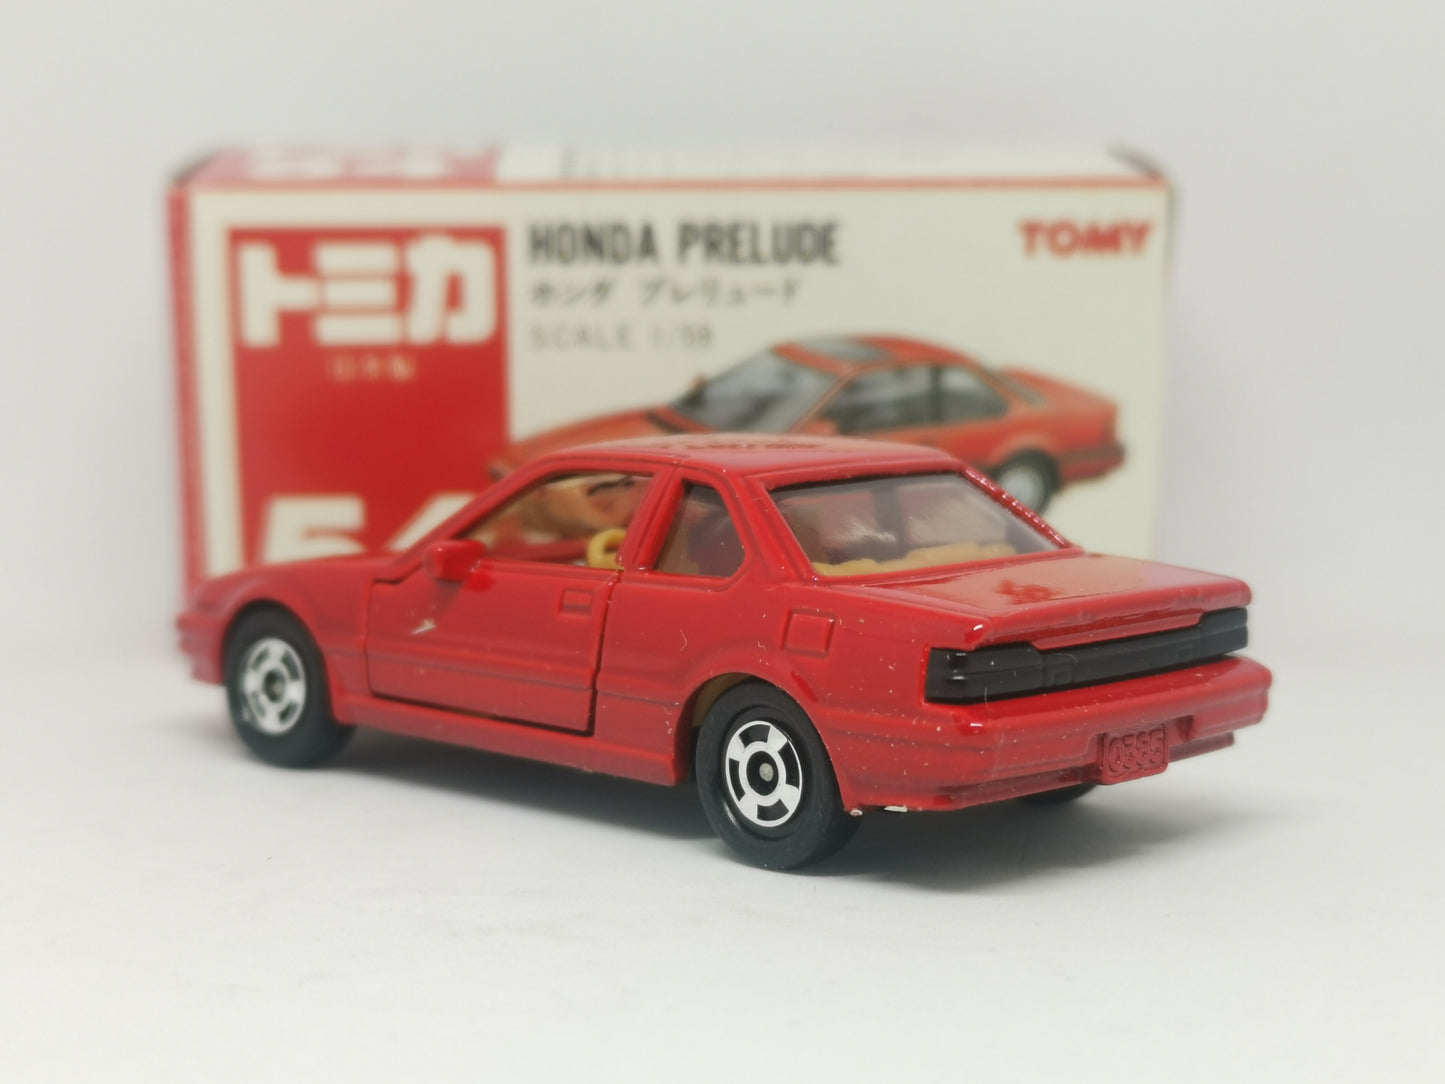 Tomica #54 Honda Prelude Red Made in Japan